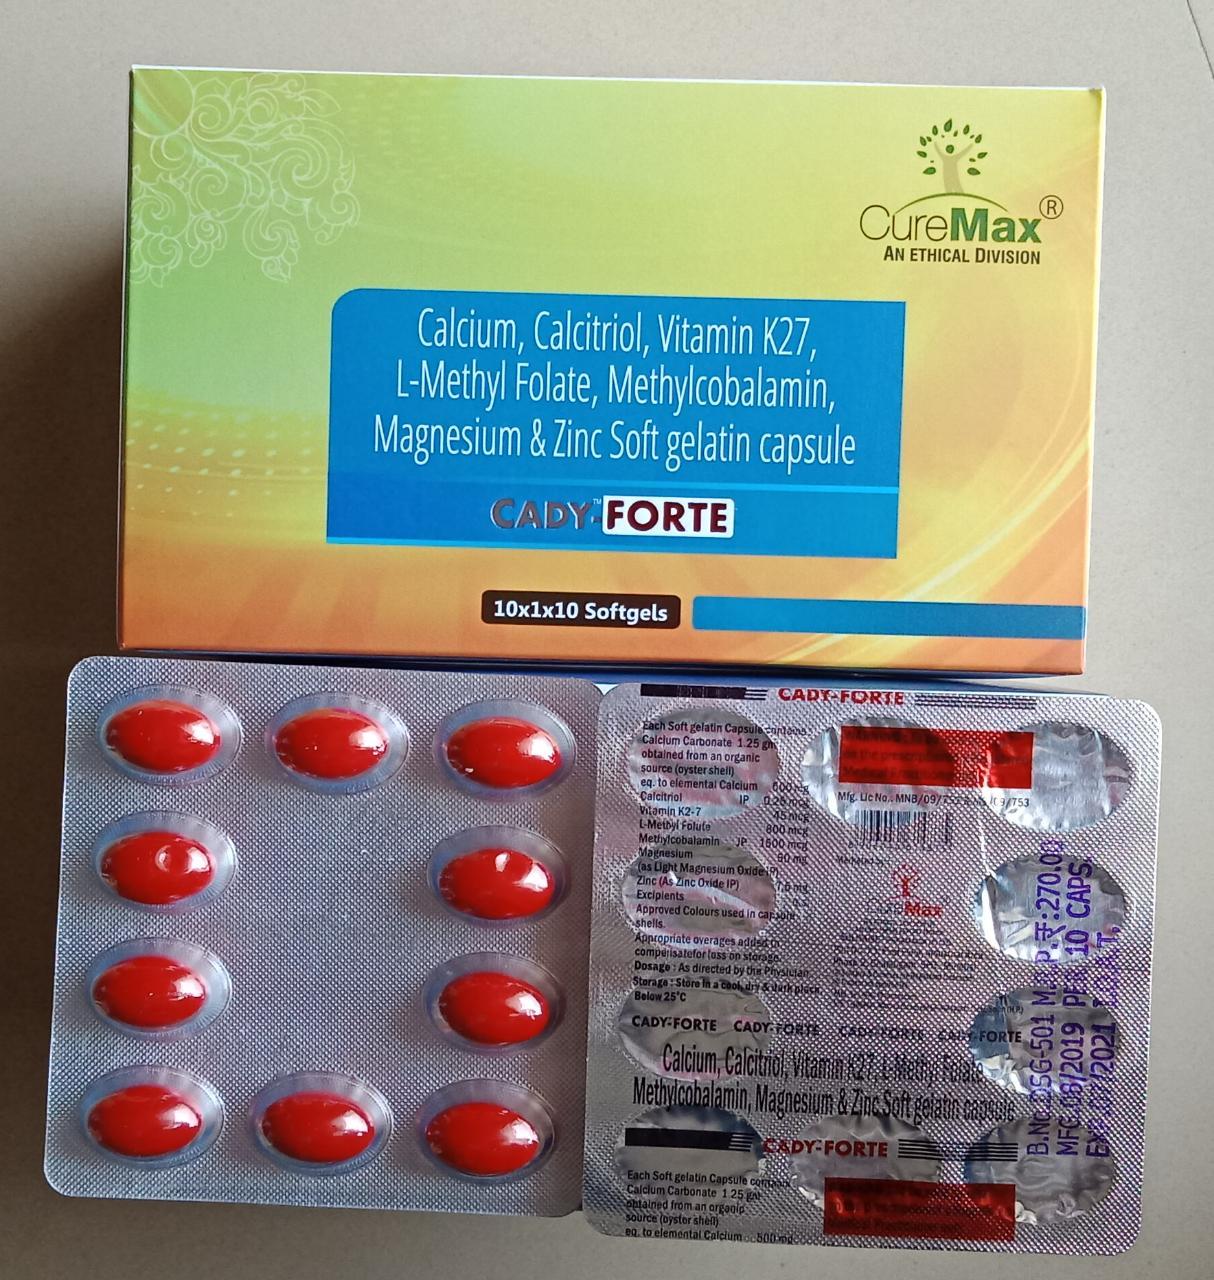 Calcium Carbonate 1.25 gm eq. to elem. Cal. 500 mg, Calcitriol 0.25 mcg, Vitamin K(2-7) 45 mcg, L-MethylFolate 800 mcg, Methylcobalamin 1500 mcg, Magnesium 50 mg, Zinc 7.5 mg